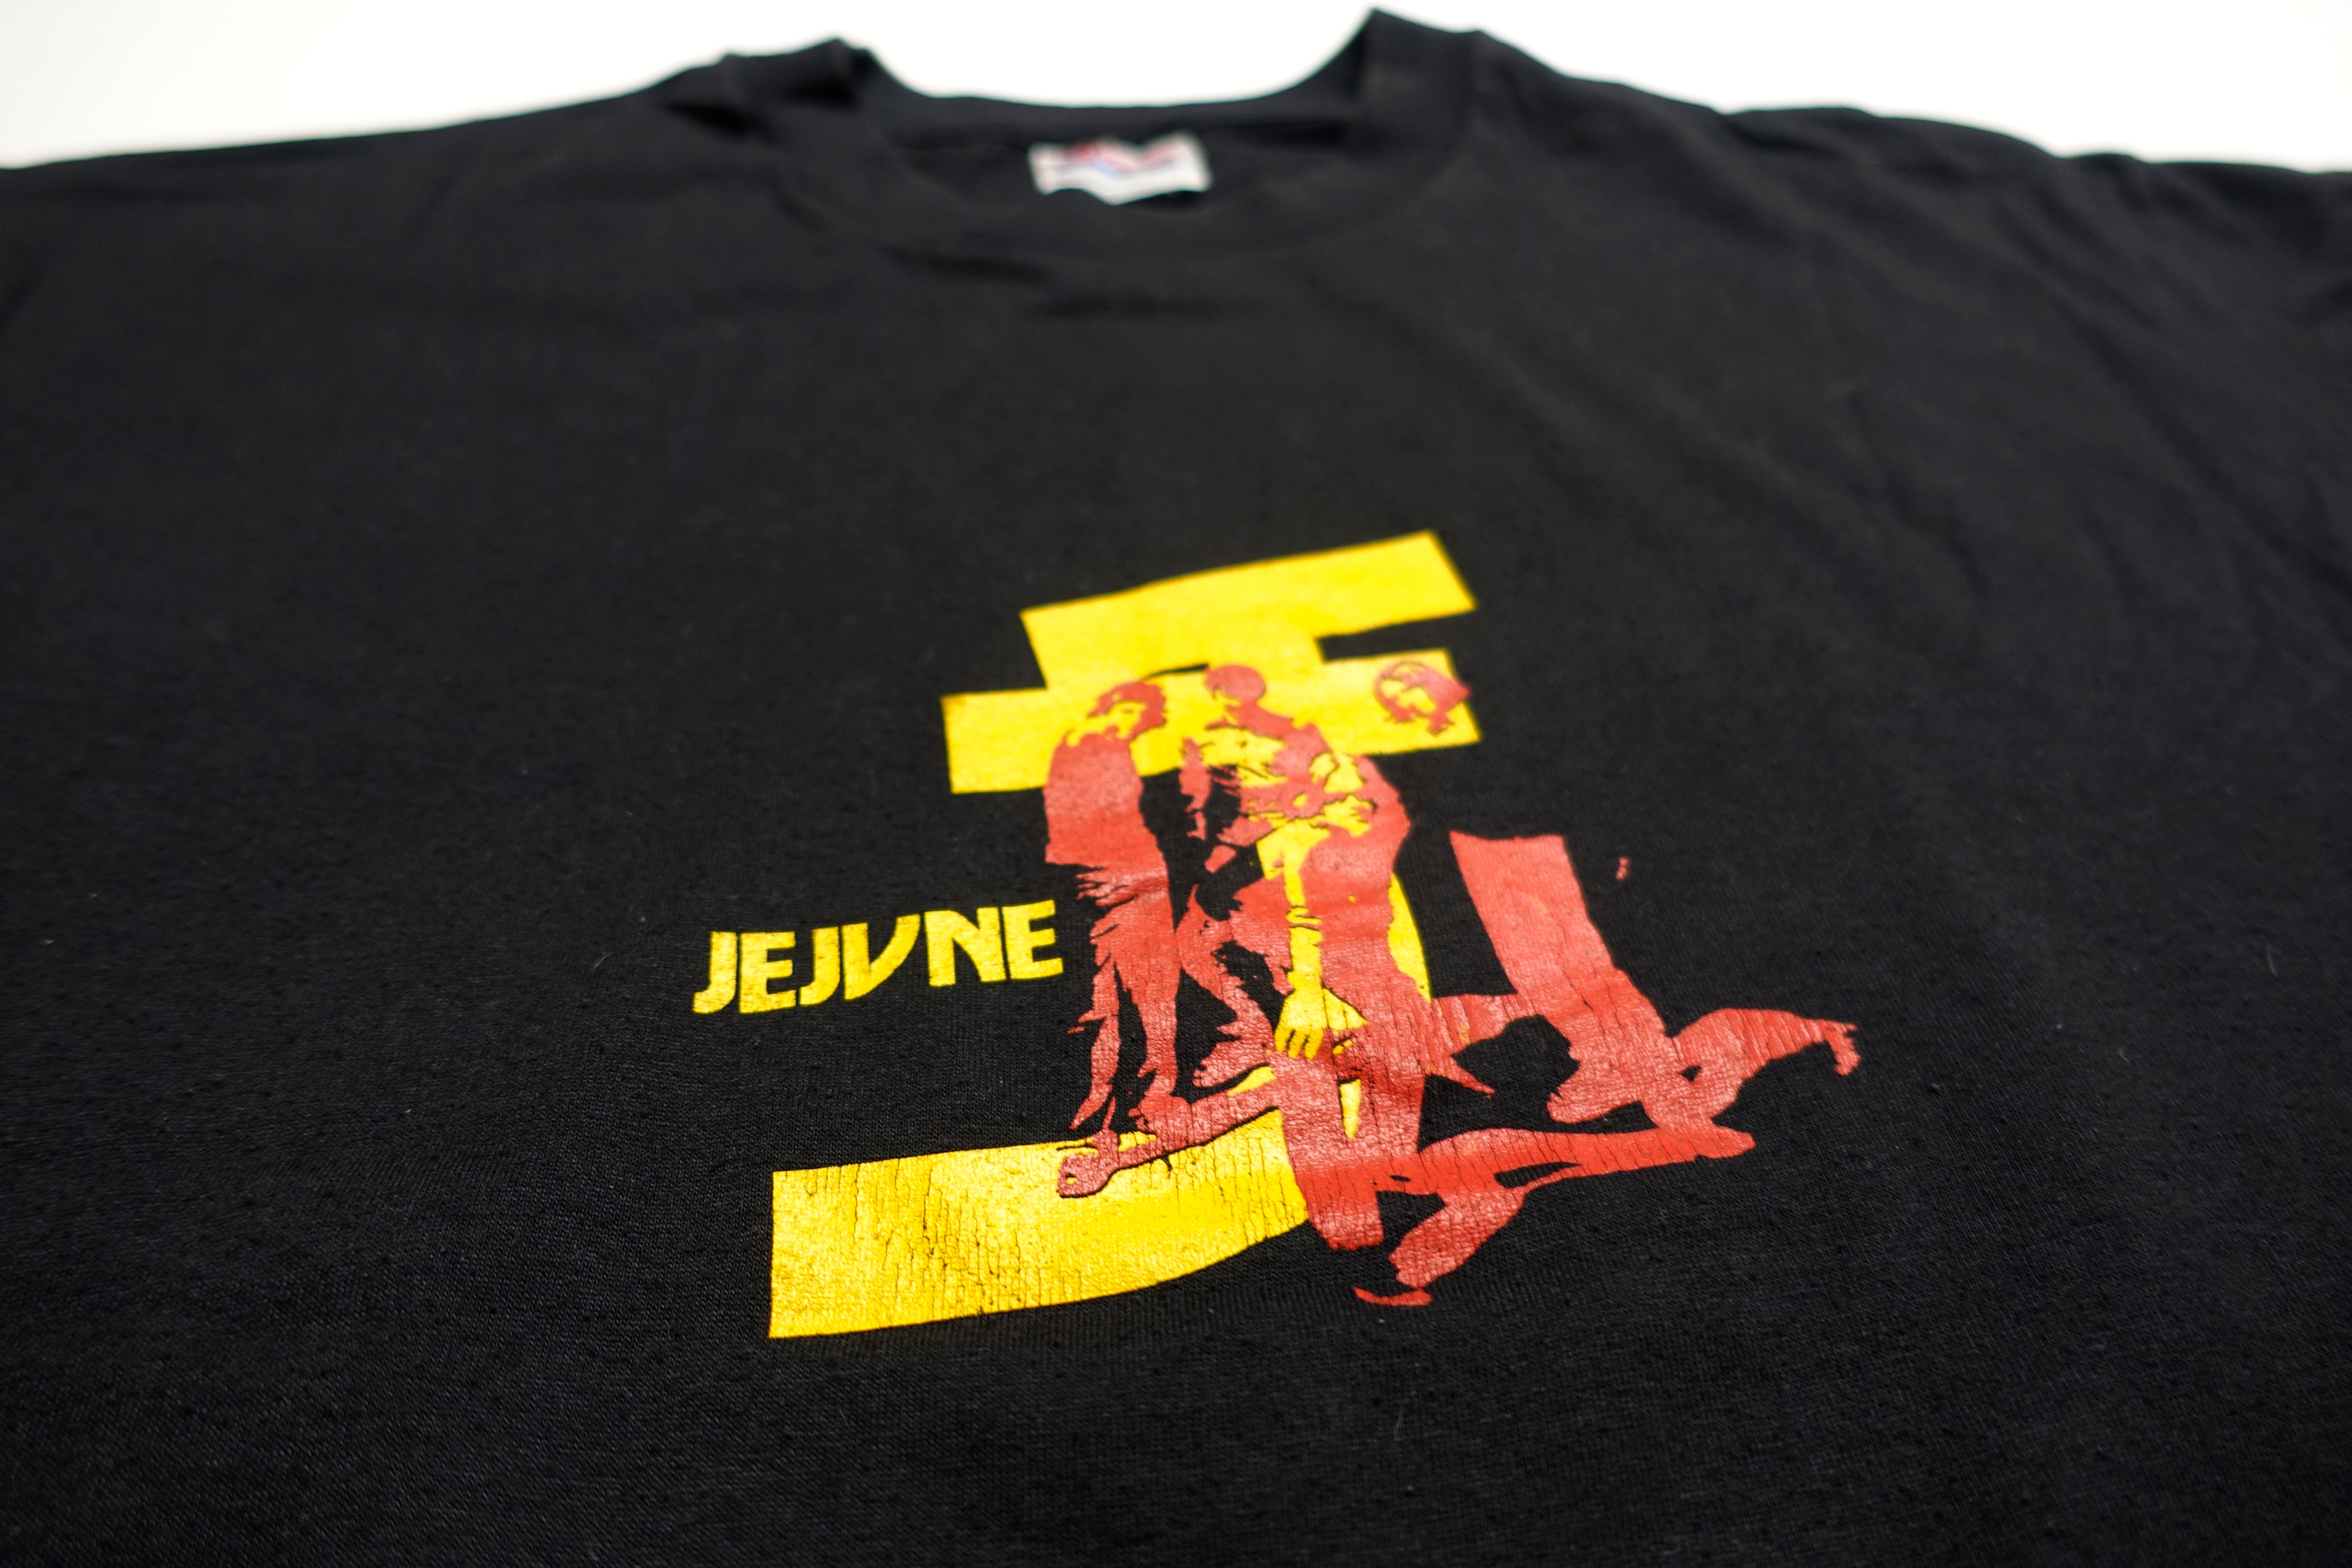 Jejune - J / Band Photo 90's Tour Shirt Size Large